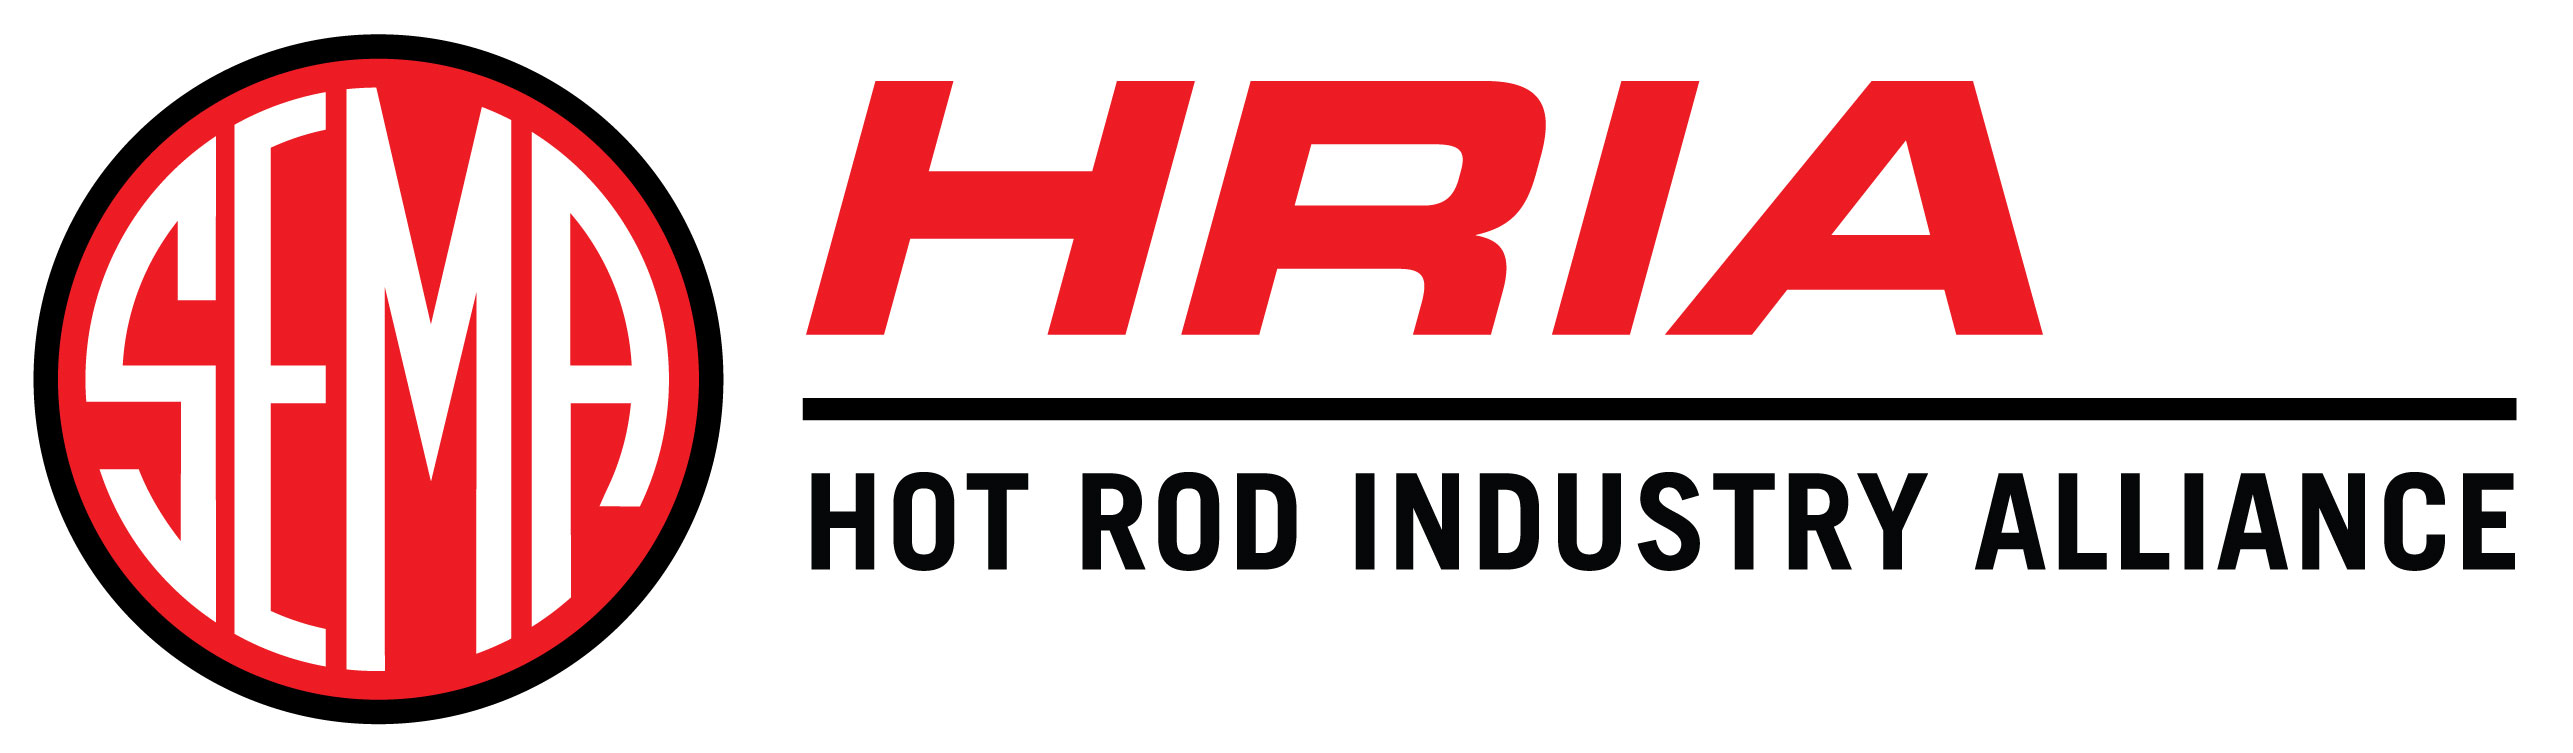 Hot Rod Industry Alliance - HRIA Logo